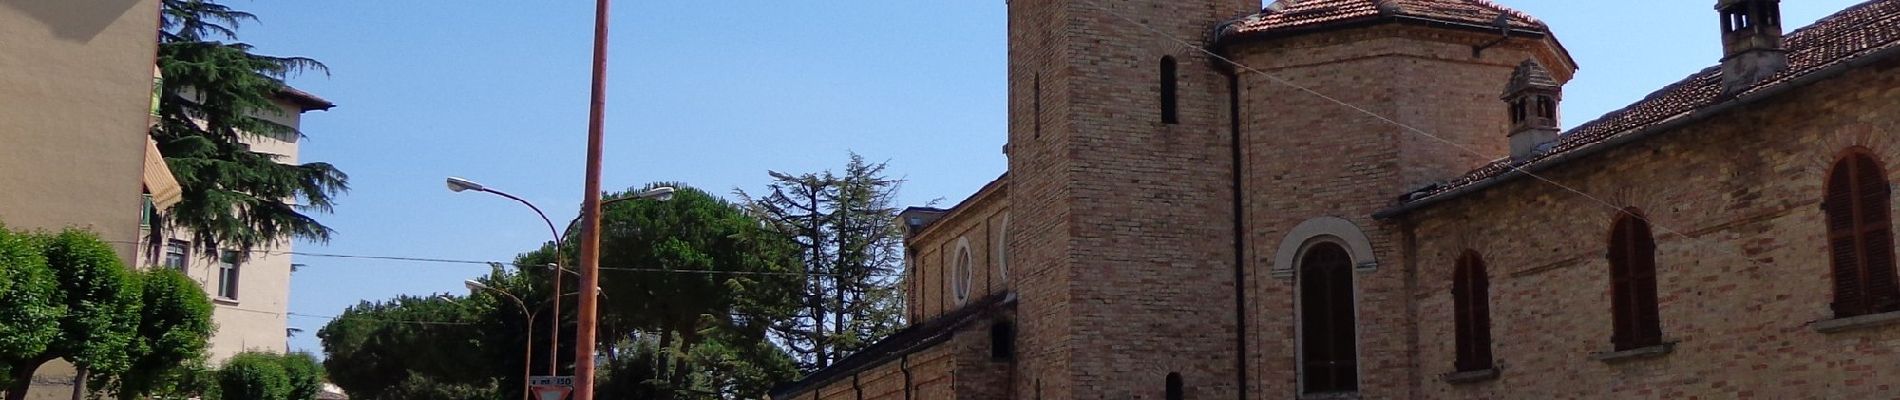 Randonnée A pied Ascoli Piceno - CTP S.s Cosma e Damiano - Photo